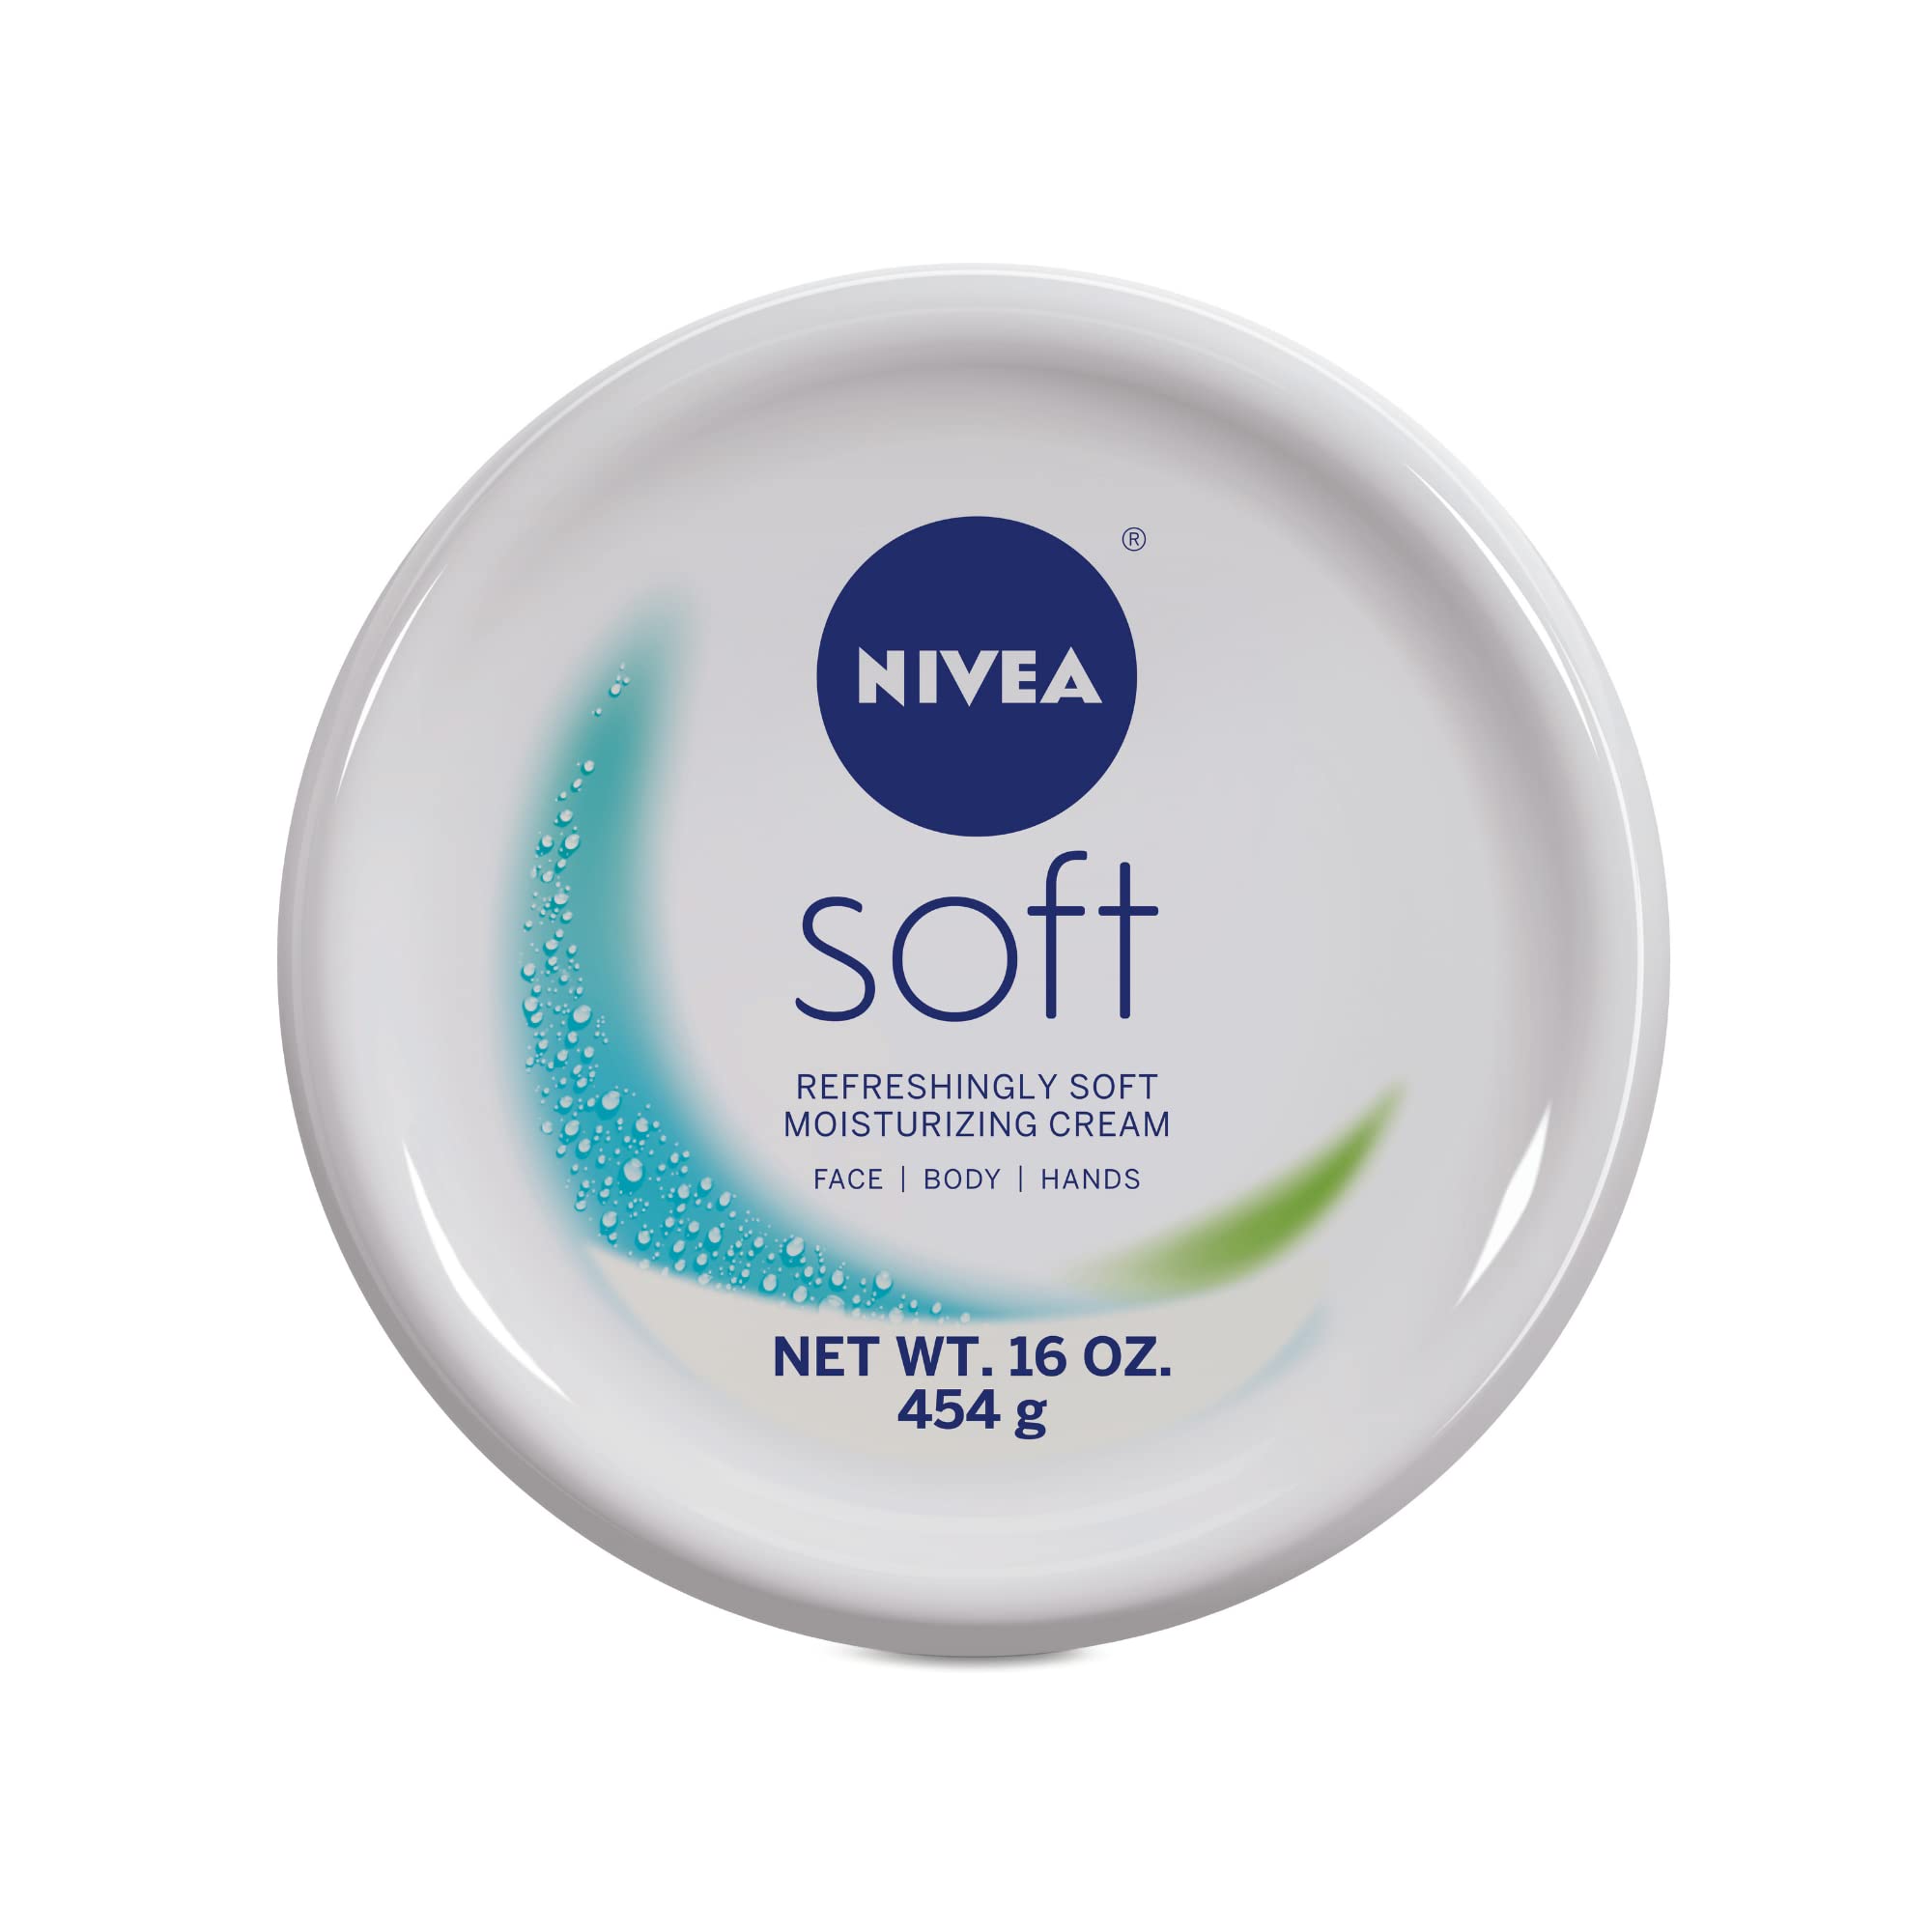 NIVEA Soft Cream, Refreshingly Soft Moisturizing Cream, Body Cream, Hand Cream, Face Cream, 16 Oz Jar